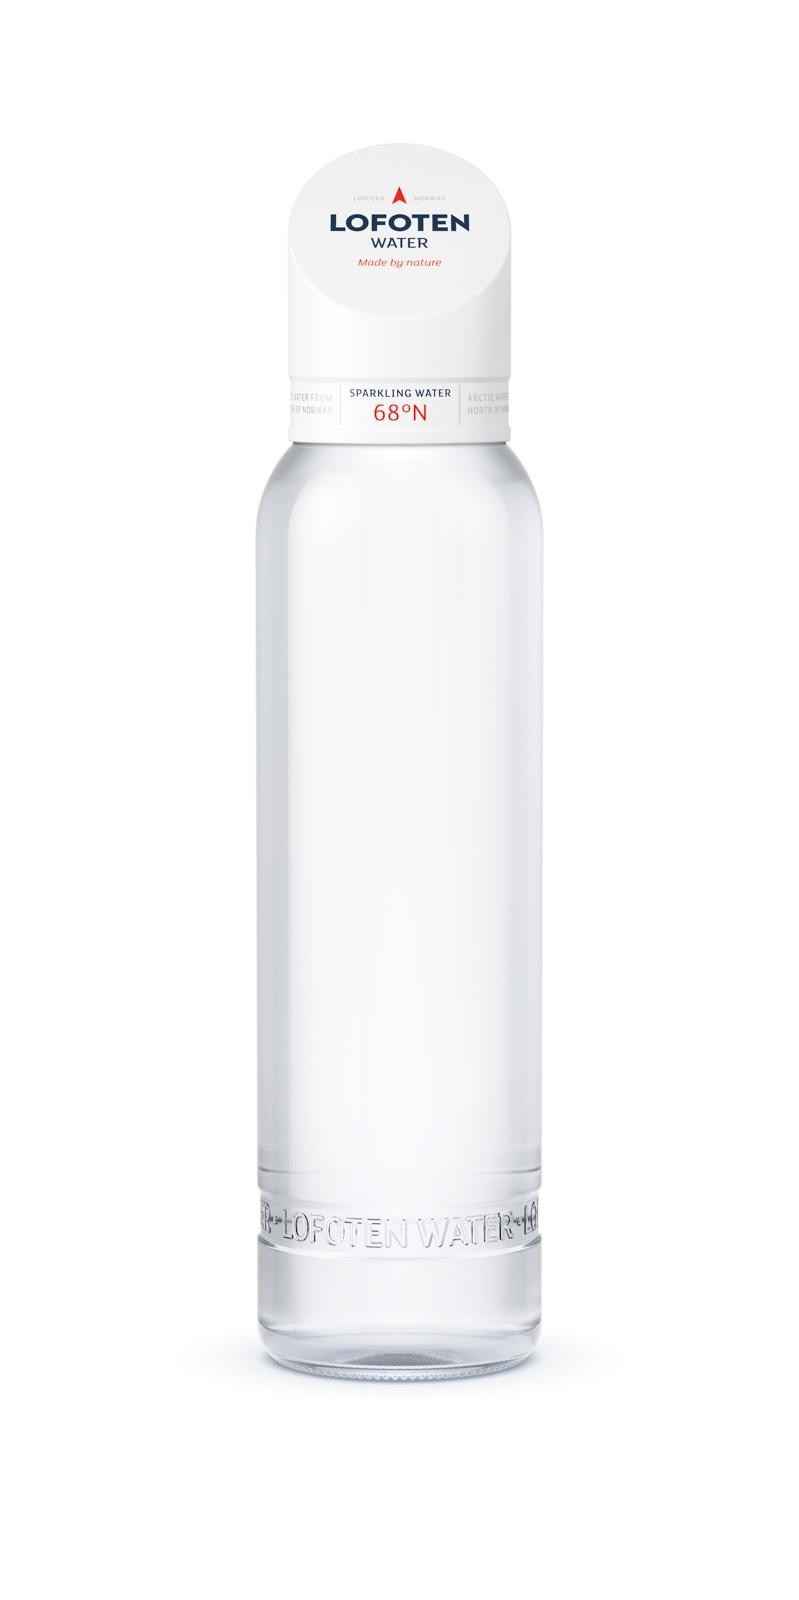 Lofoten Arctic Water's glass bottle Still 6 pack